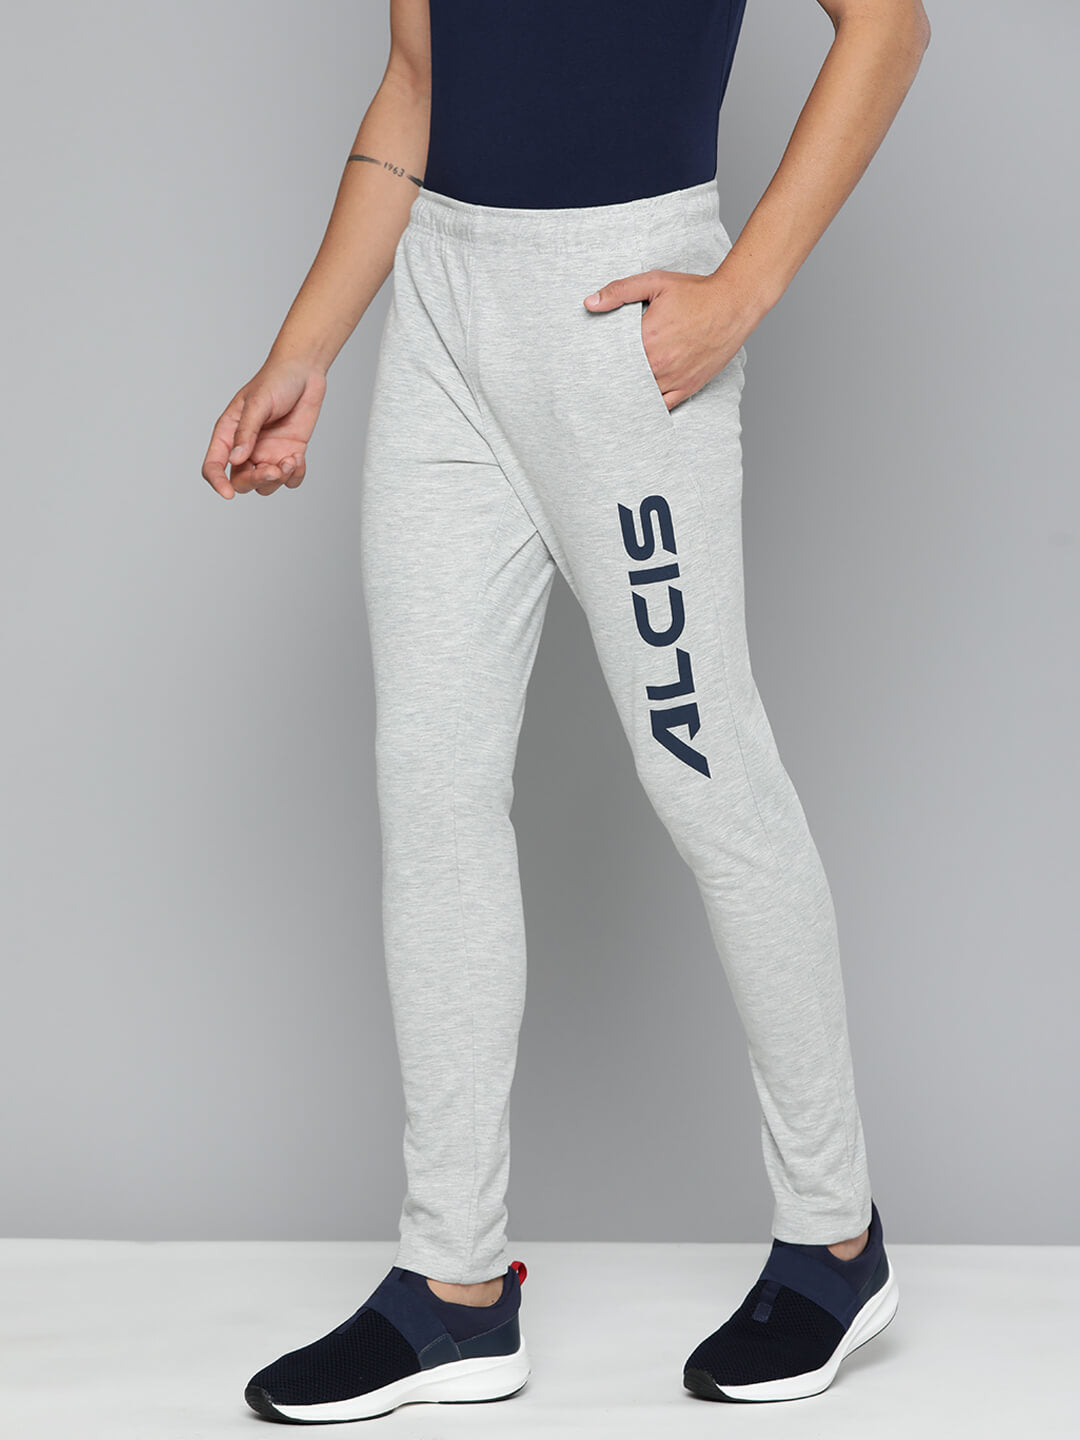 Mens Casual Athletic Cargo Pants - Fashion Slim Fit Palestine | Ubuy